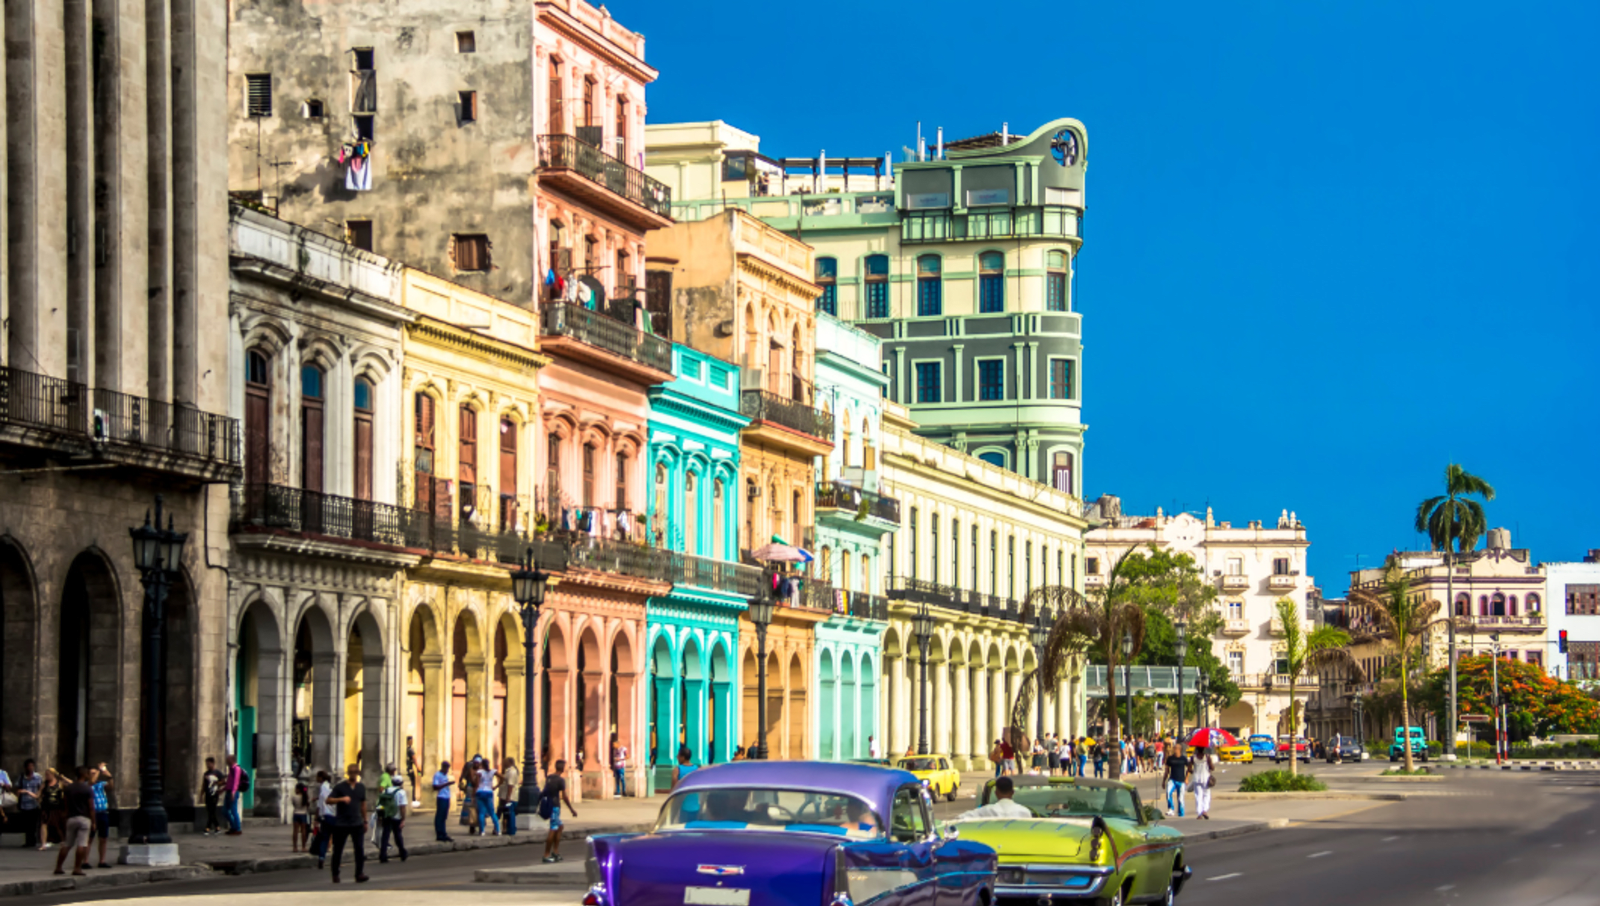 Downtown Havana Cuba colourful buildings and classic cars